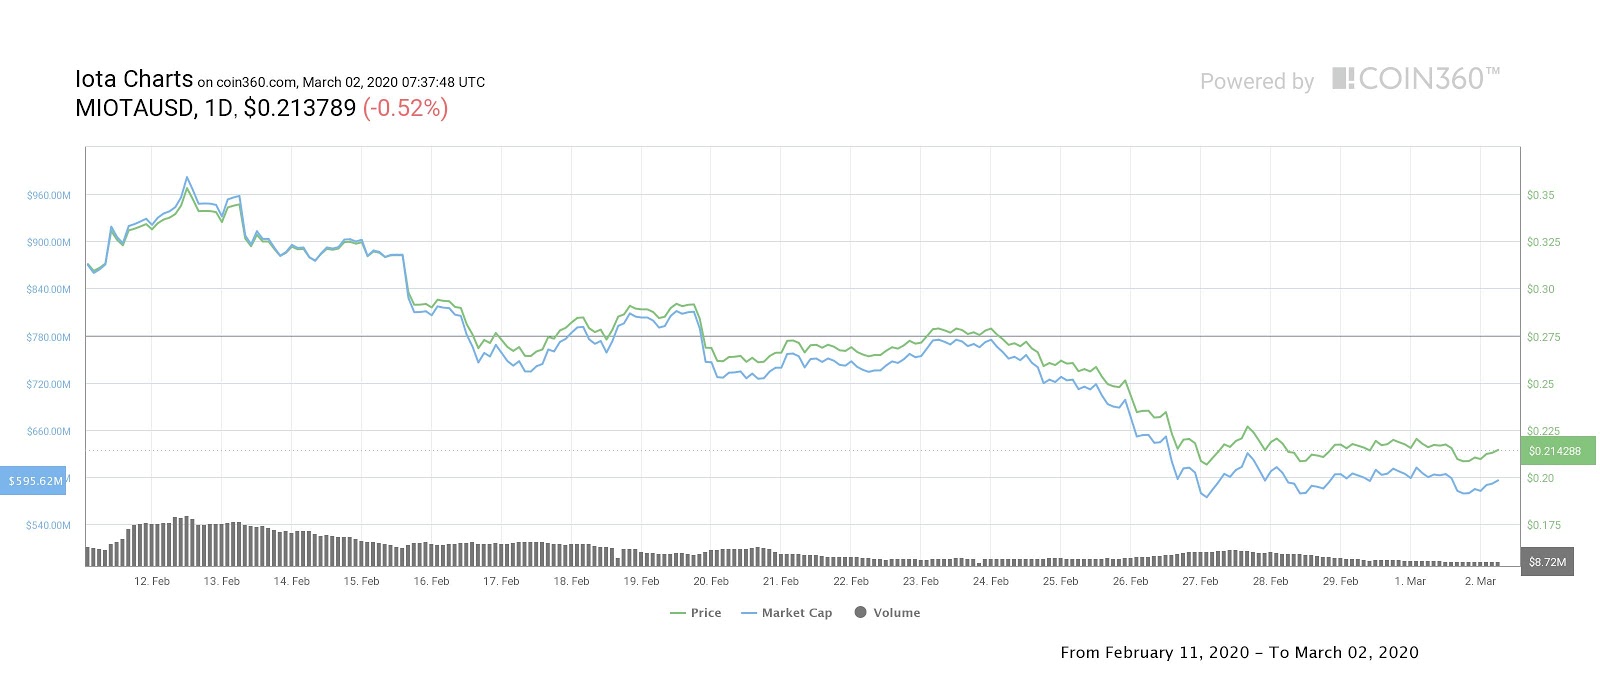 MIOTA/USD price chart since Feb. 11. Source: Coin360.com